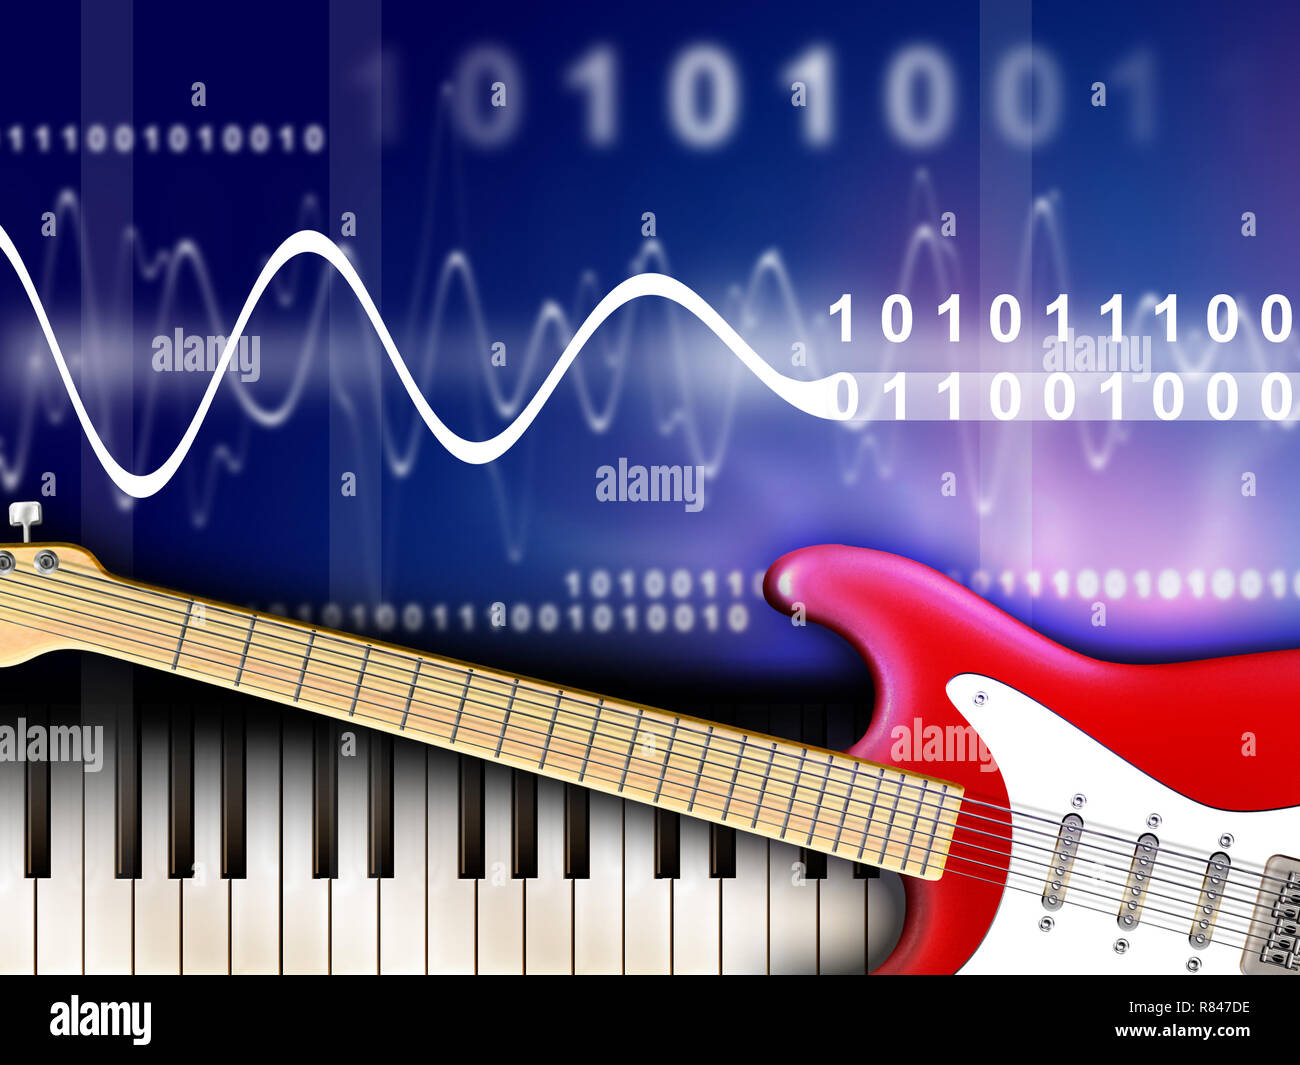 Musical instruments and digital music editing. Digital illustration.00000 Stock Photo